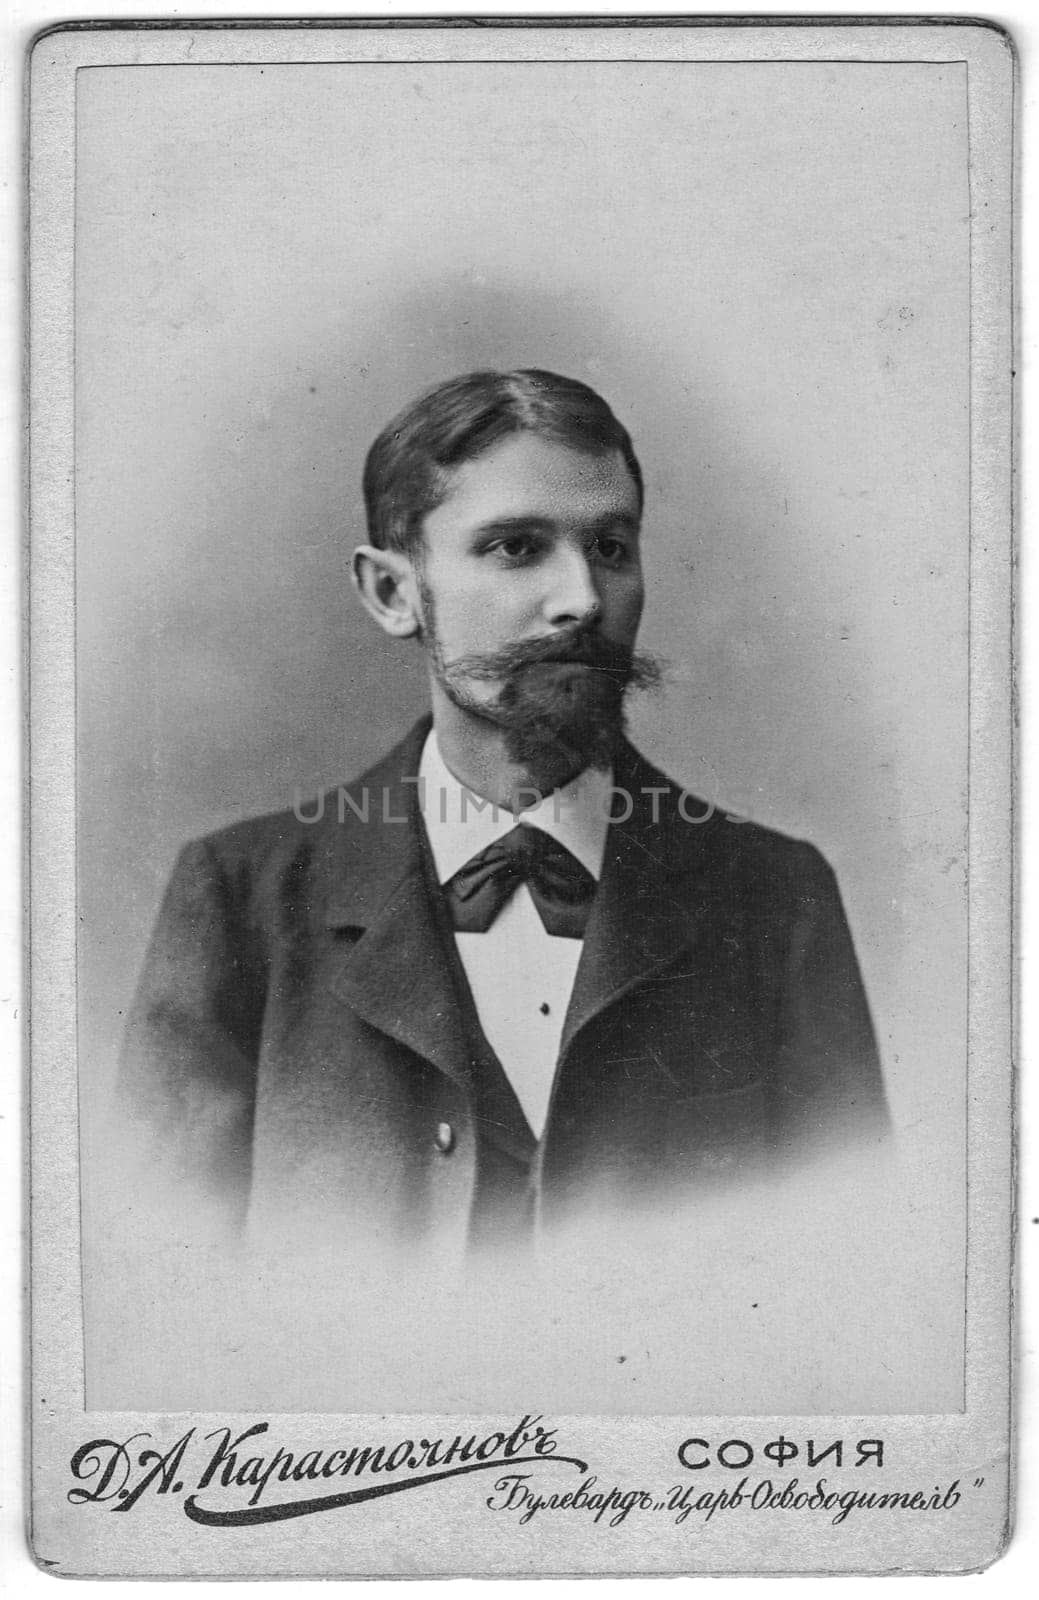 SOFIA, BULGARIA - CIRCA 1910: Vintage cabinet card shows portrait of the midle-aged man with moustache, full beard. Photo was taken in a photo studio. Edwardian era.